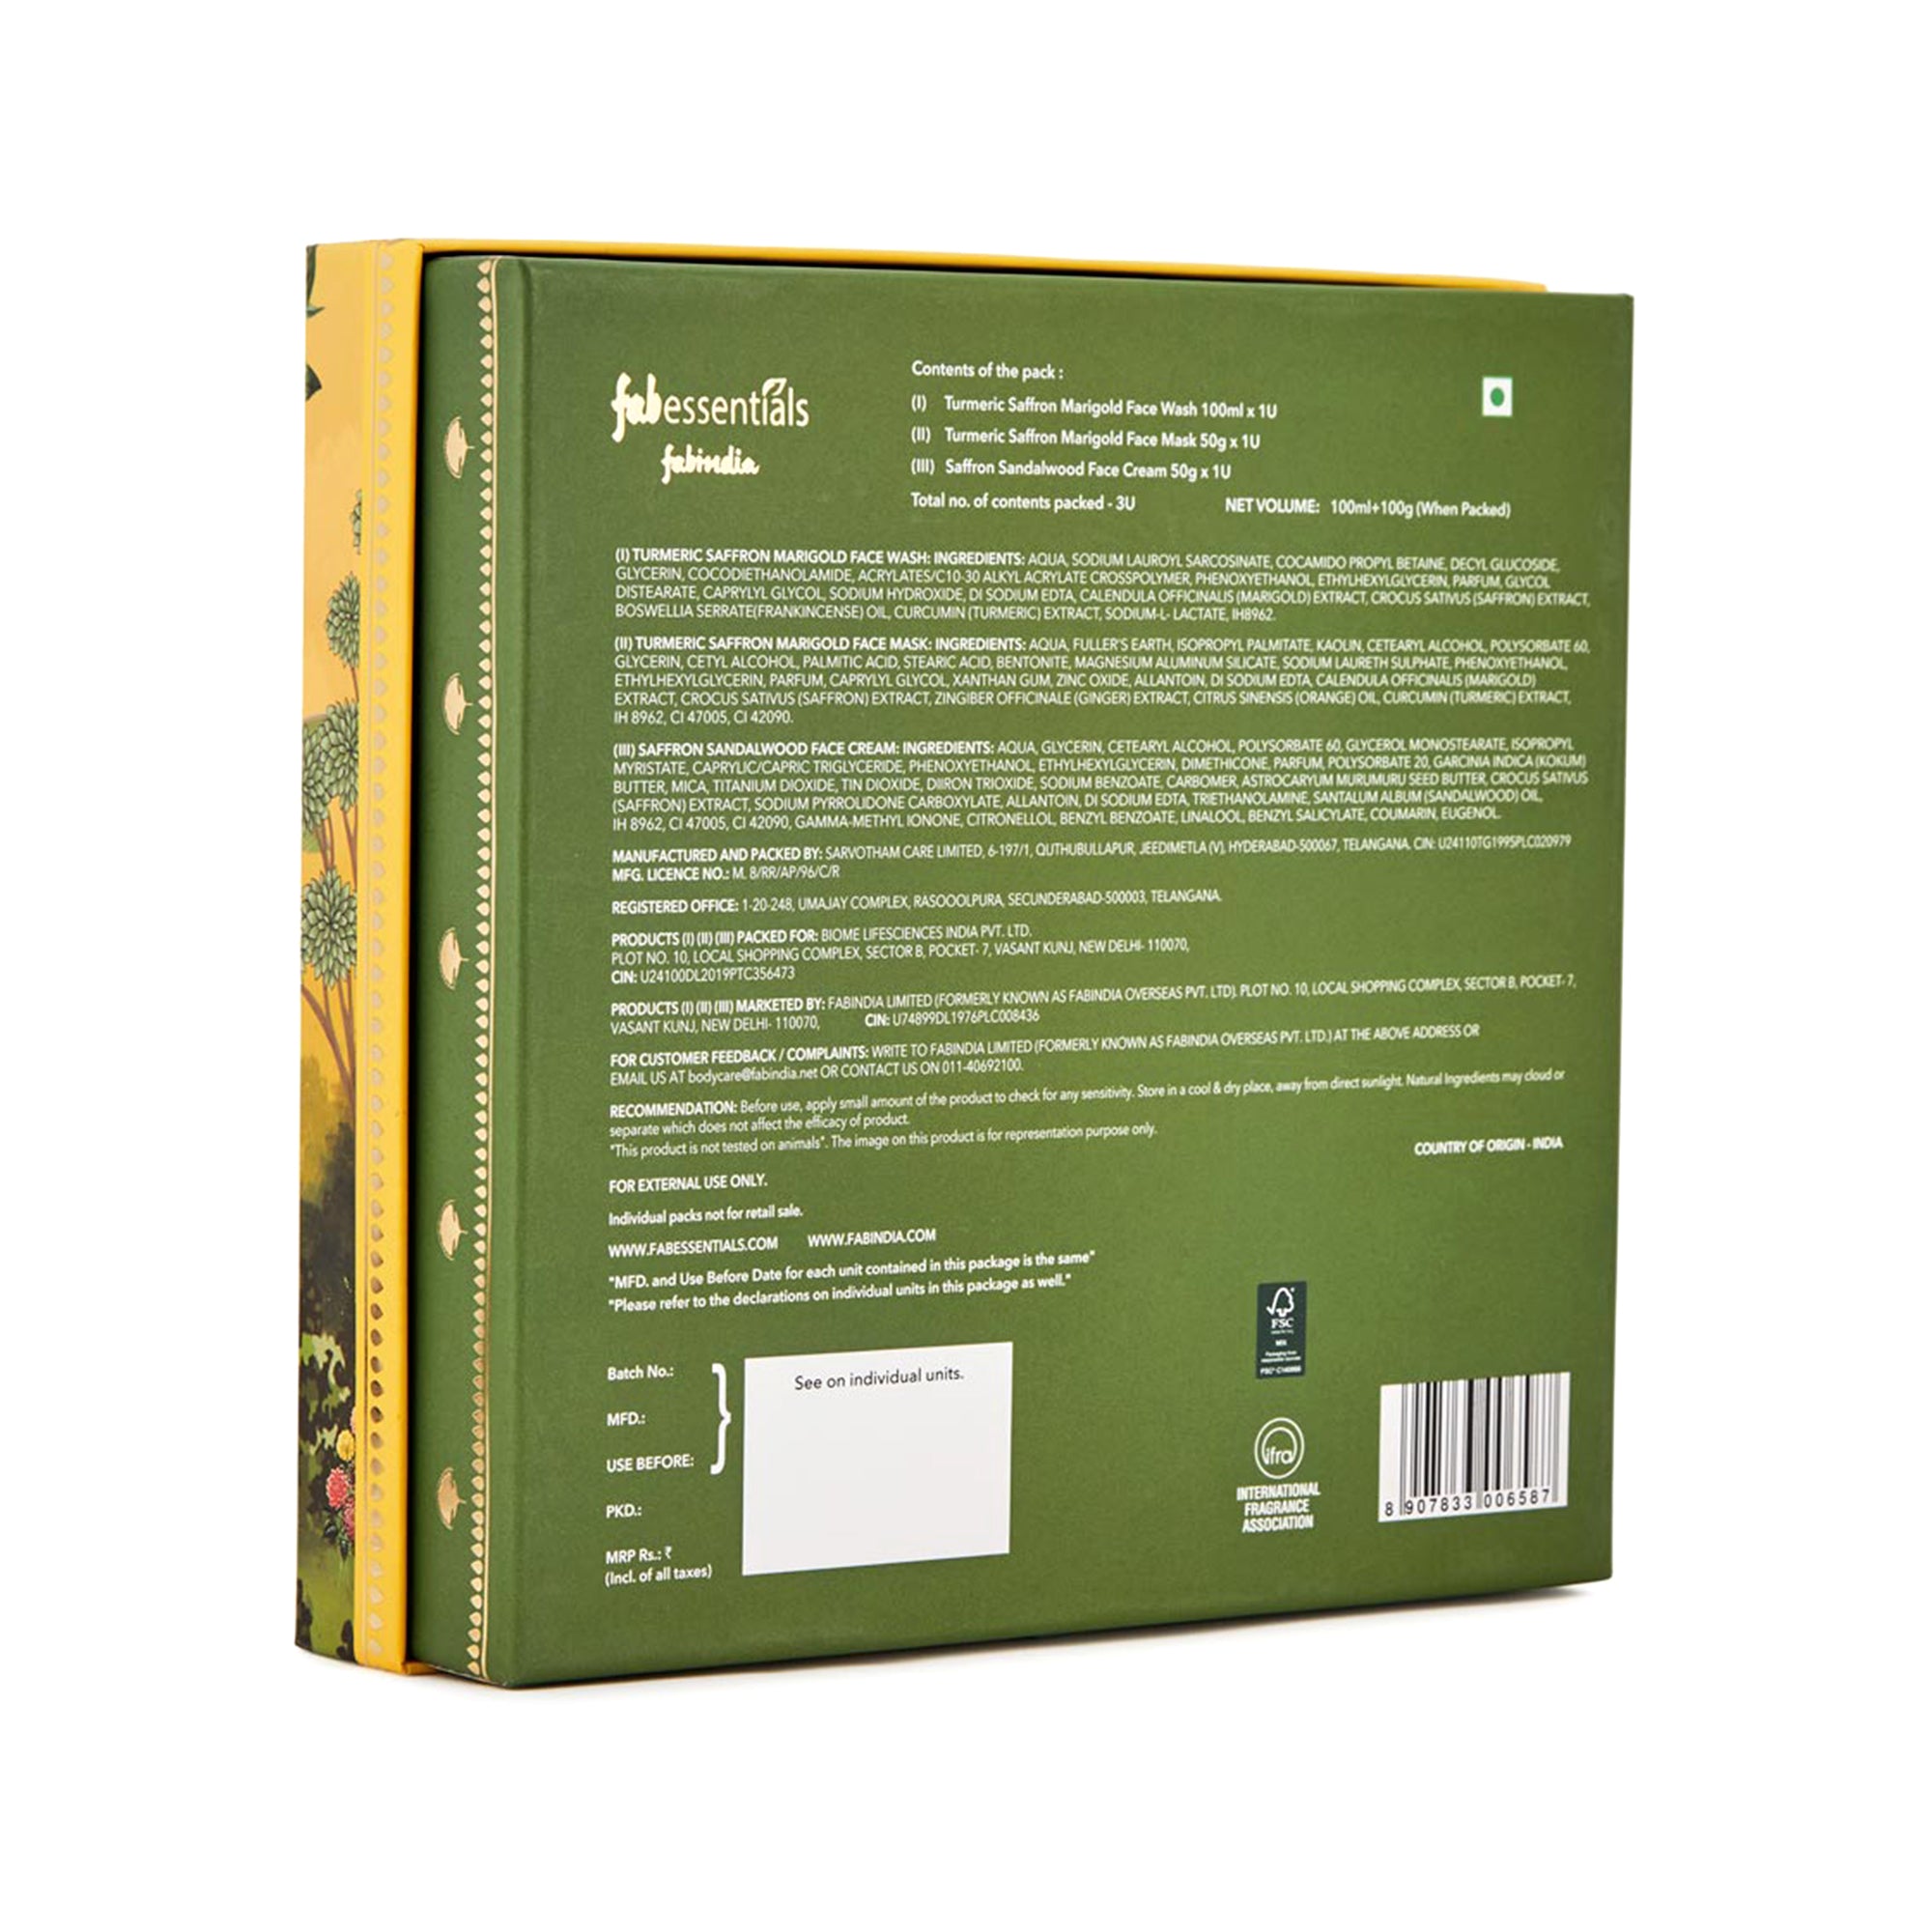 Turmeric Saffron Sandalwood Luminous Radiance Face Care Gift Set - 100 ml + 100 gm